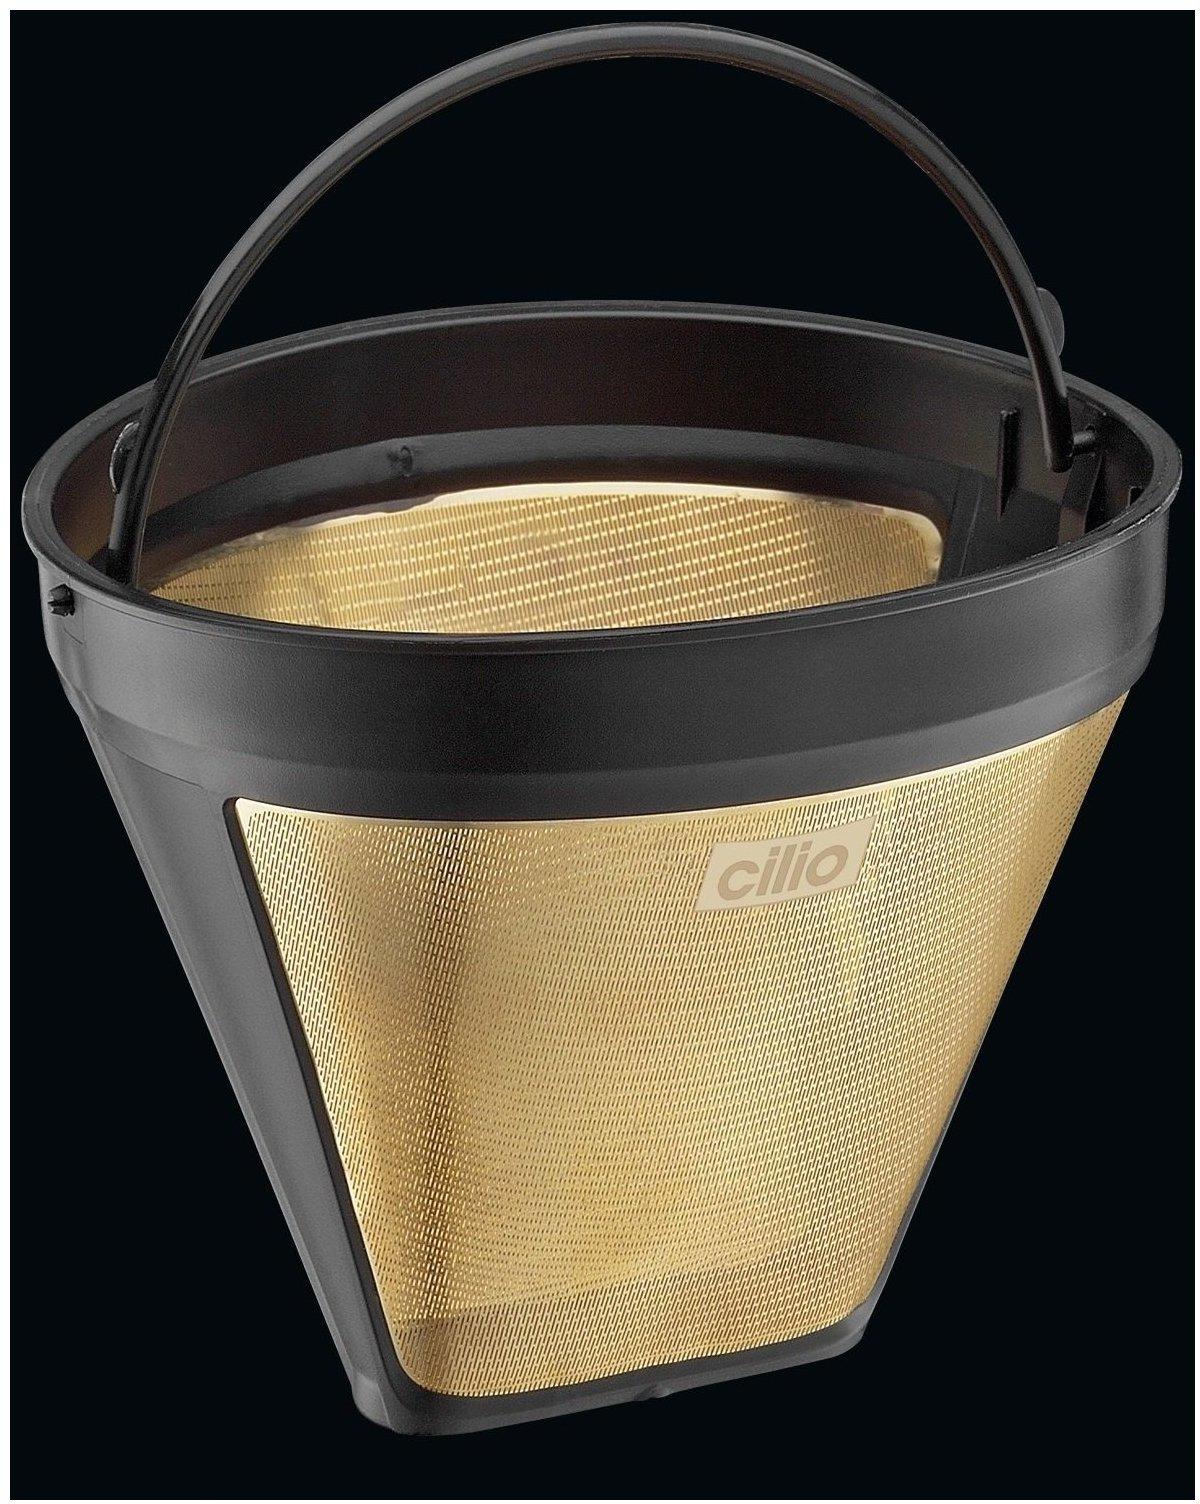 Cilio Gold Kaffeefilter Größe 2 Test - ❤️ Testbericht.de Mai 2022